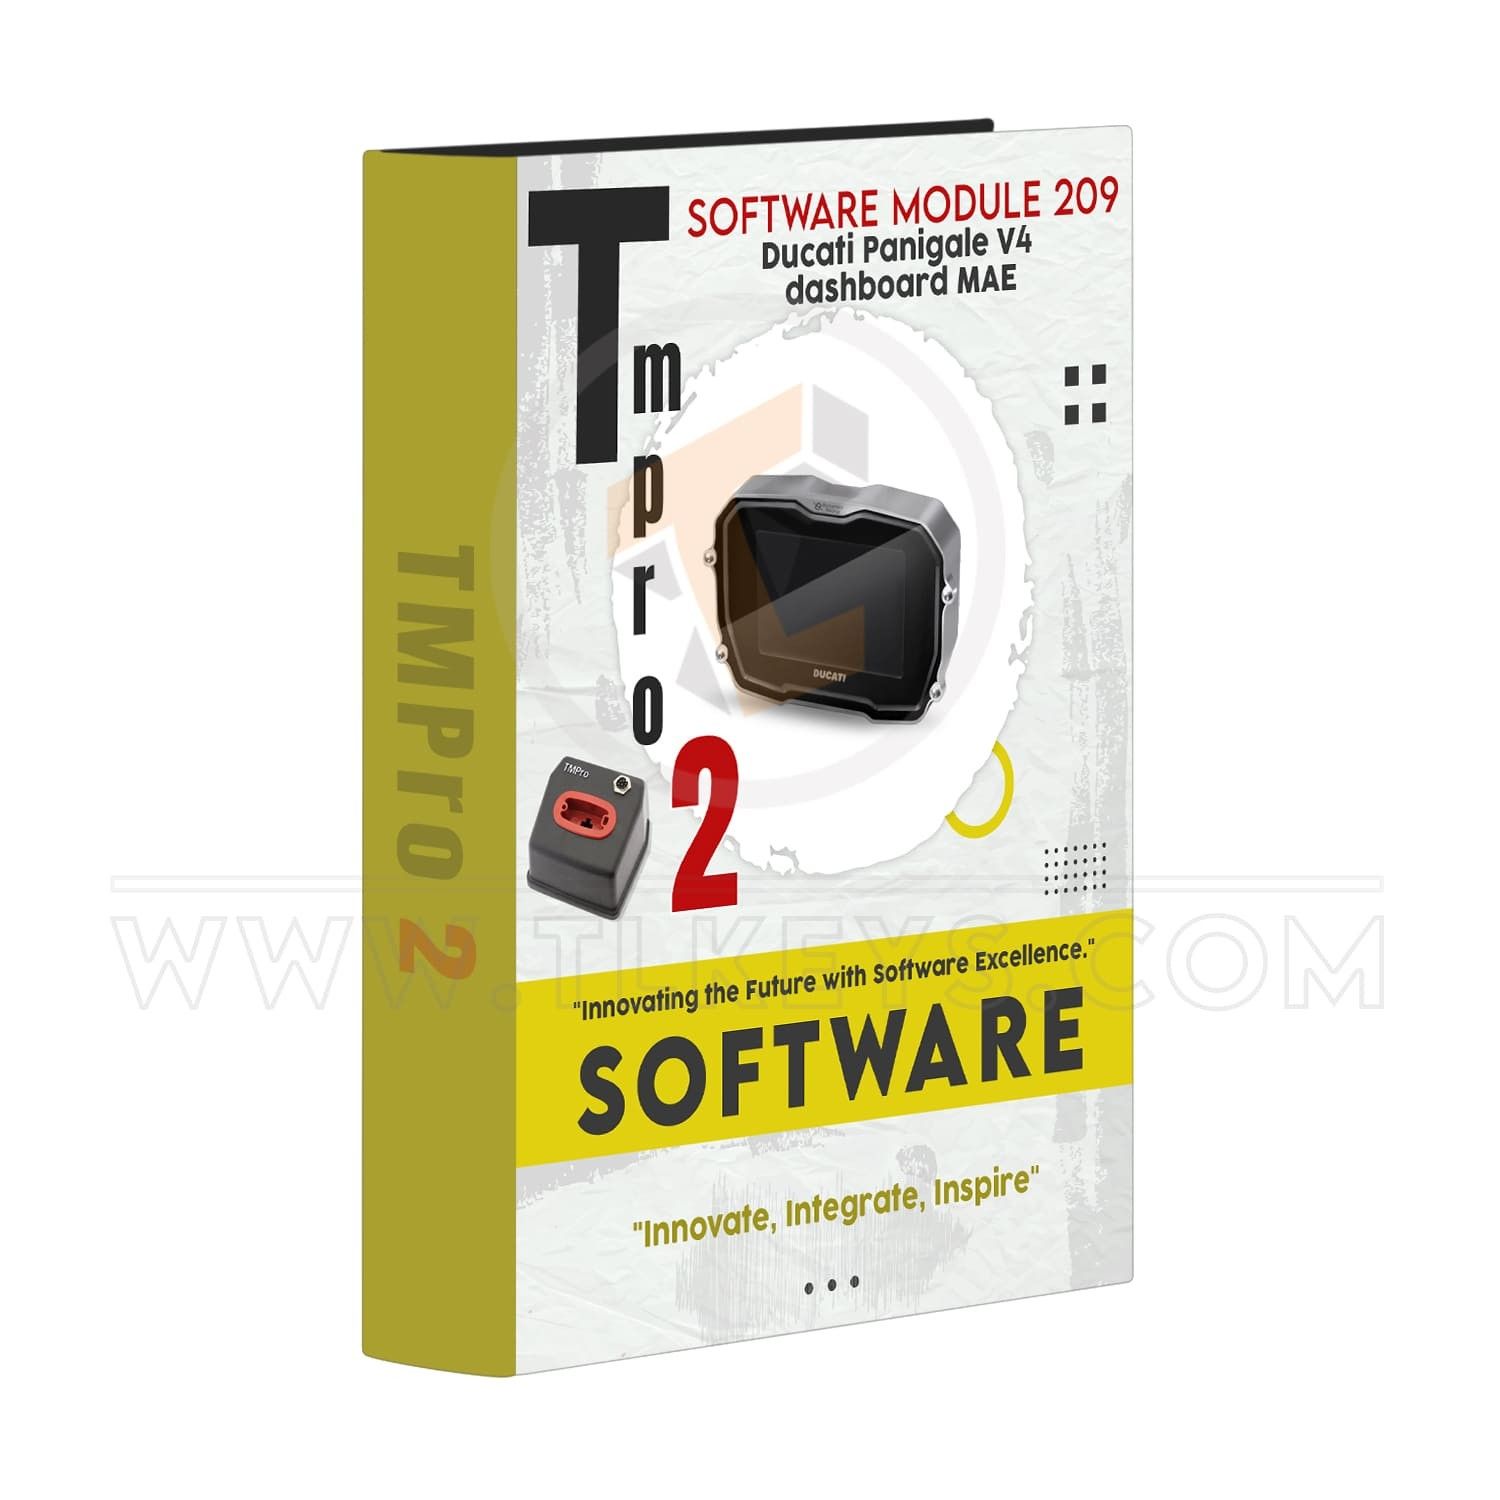 Tmpro 2 Tmpro 2 Software module 209 – Ducati Panigale V4 dashboard software